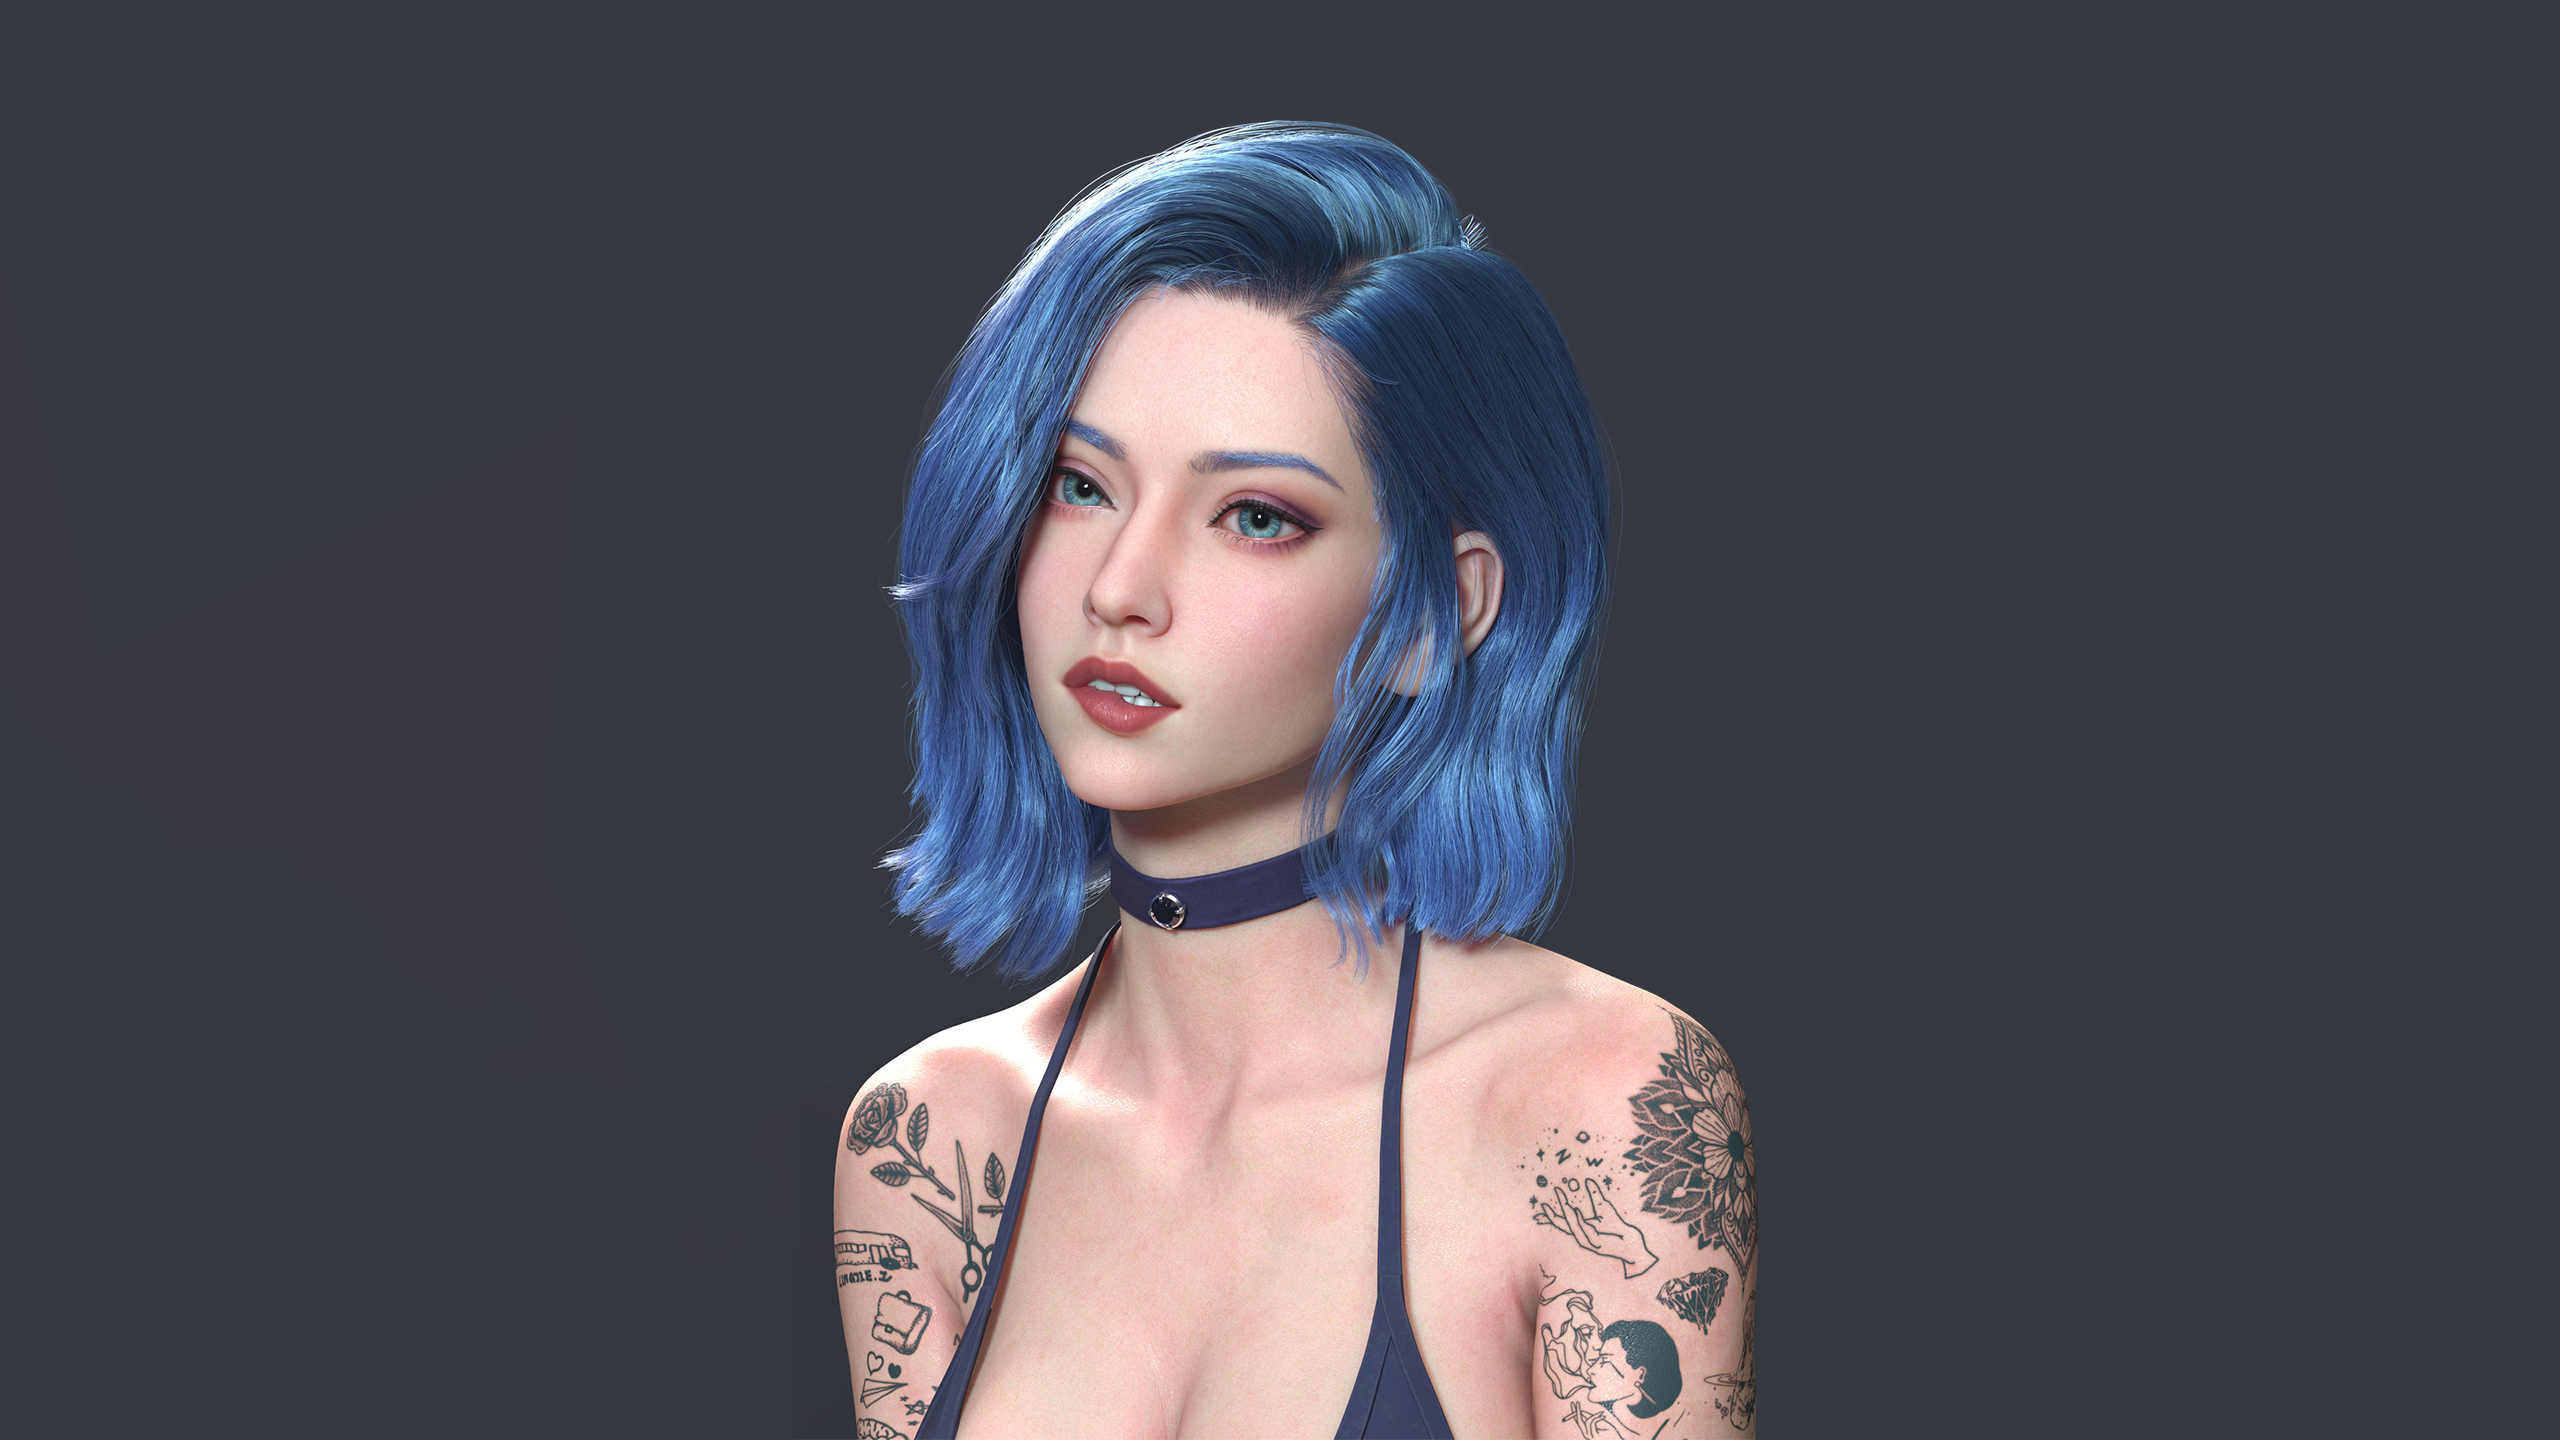 General 2560x1440 women fantasy girl blue hair tattoo punk digital art simple background collar Ling Jie Zeng blue eyes blue bikini bikini top collarbone minimalism biting lips inked girls